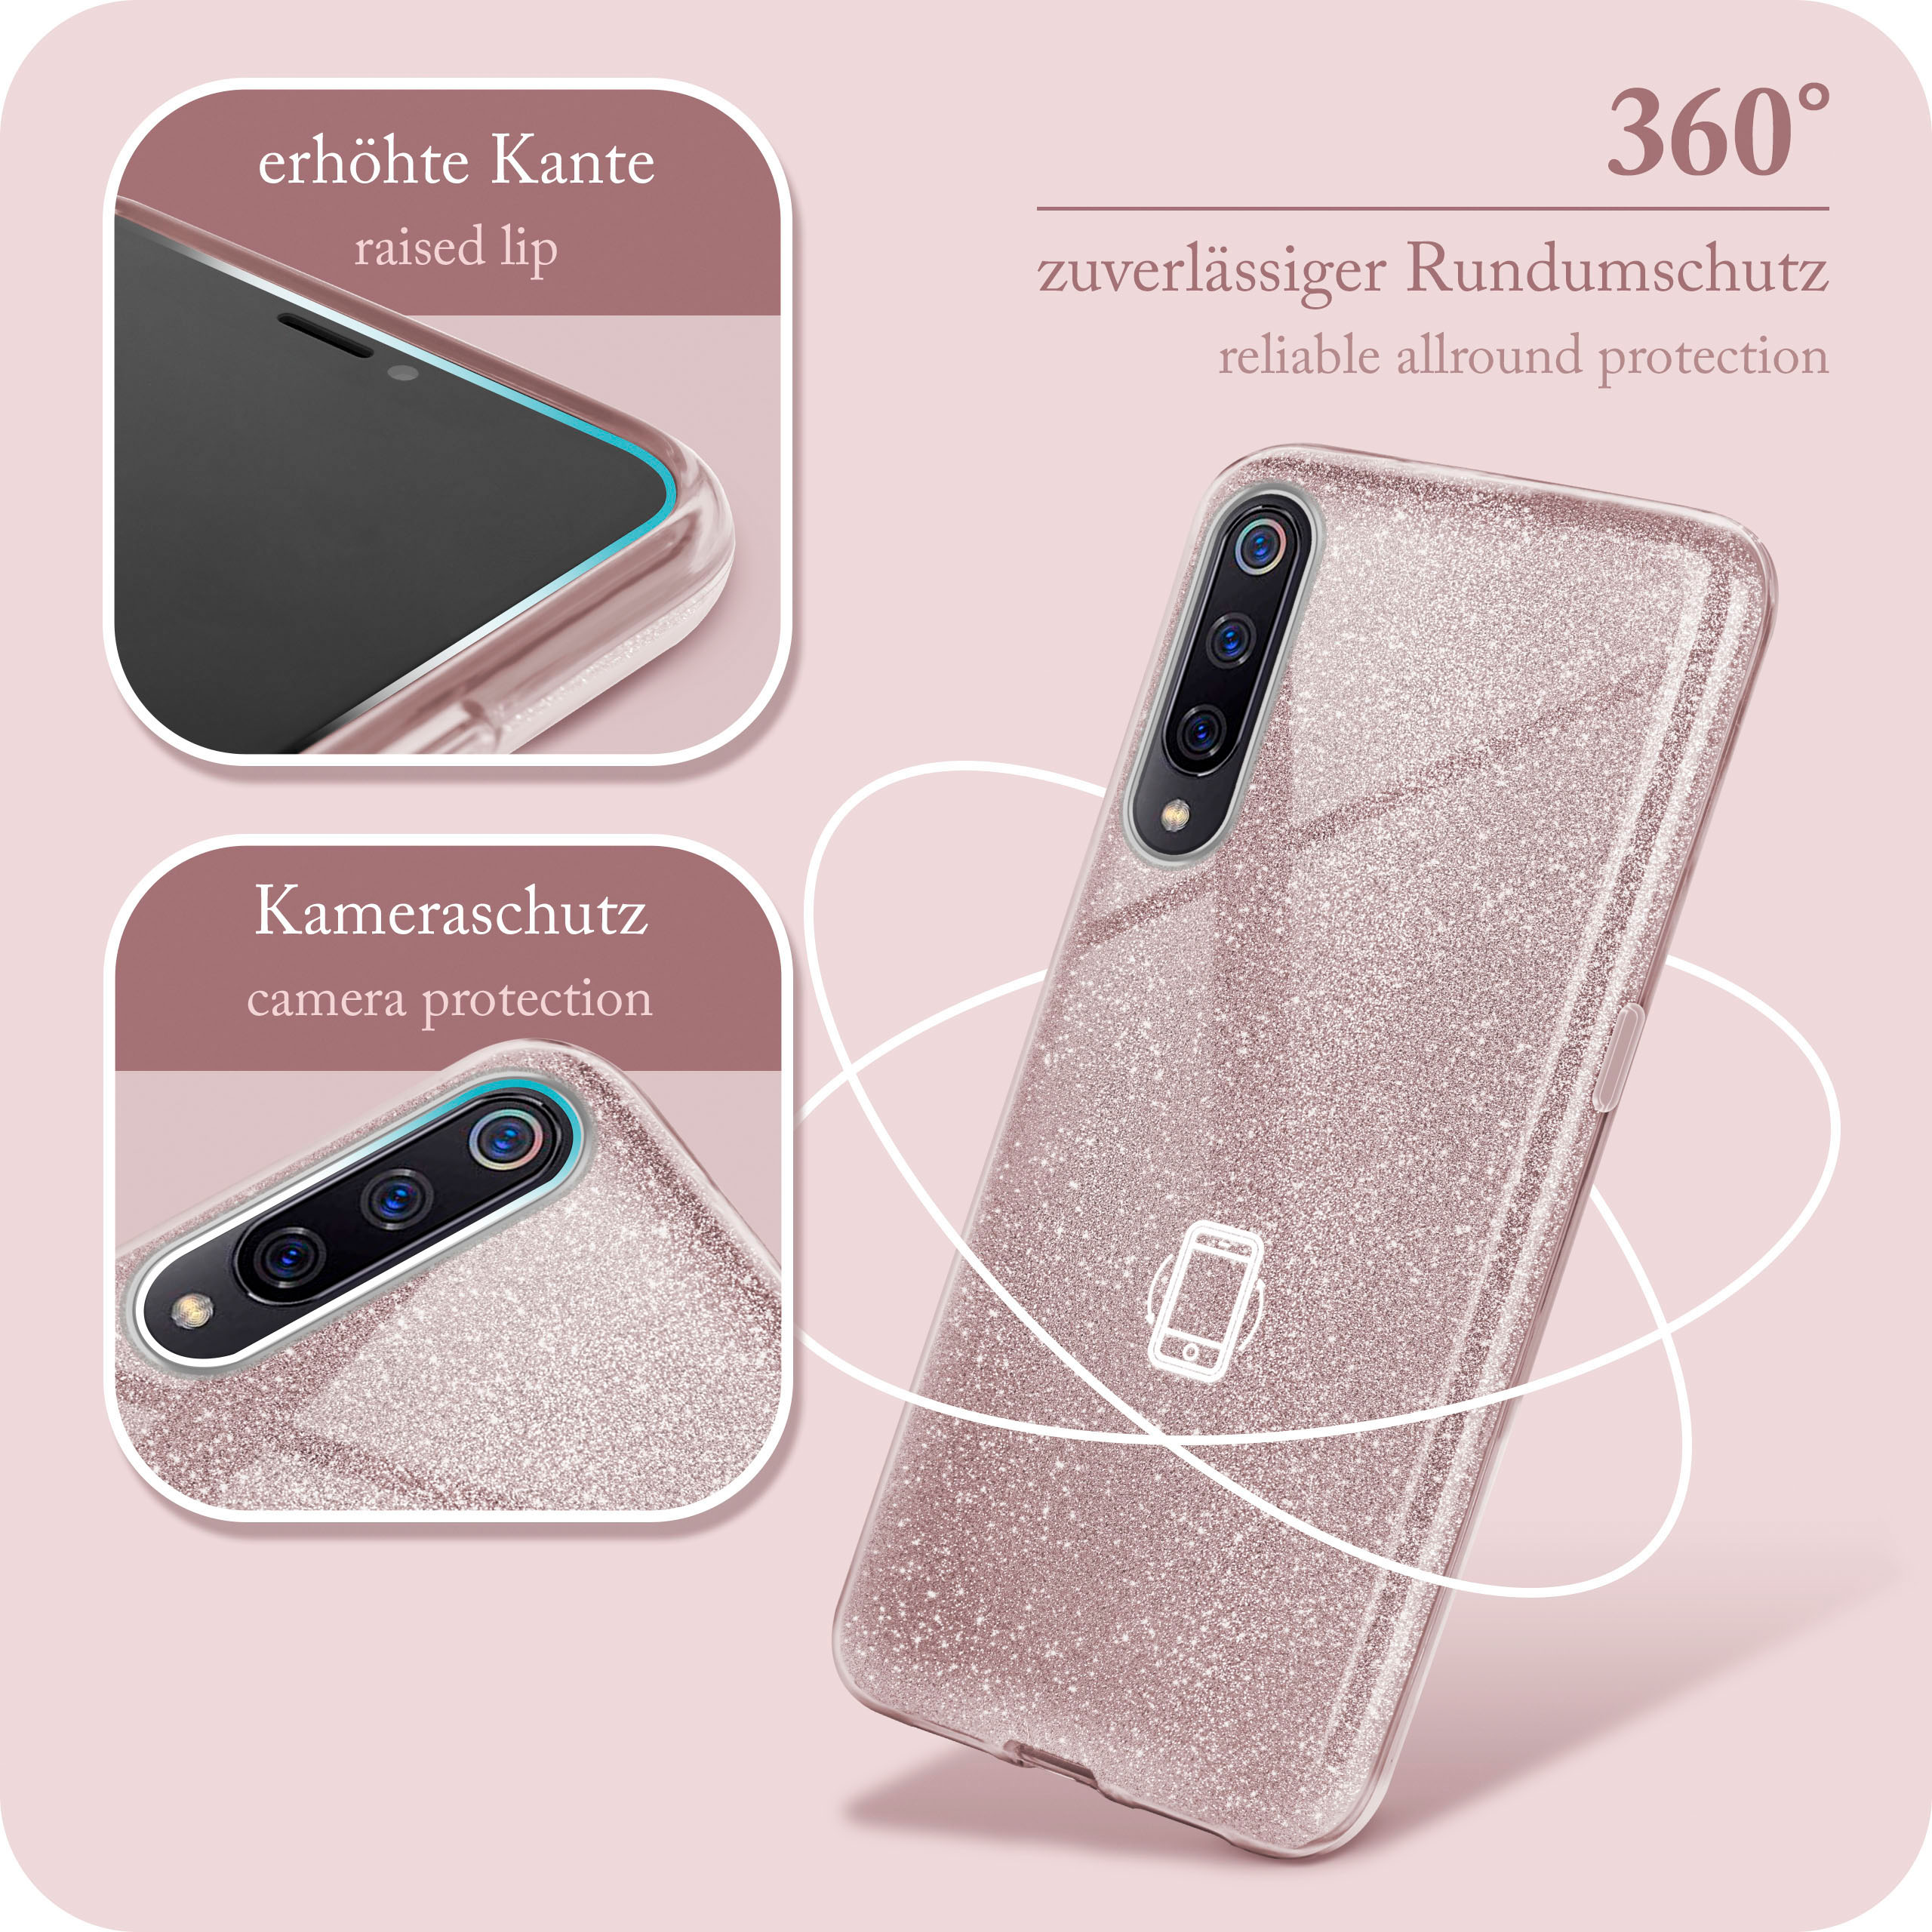 ONEFLOW Glitter Case, Backcover, - 9 Rosé Xiaomi, Mi / Explorer, Gloss Mi 9